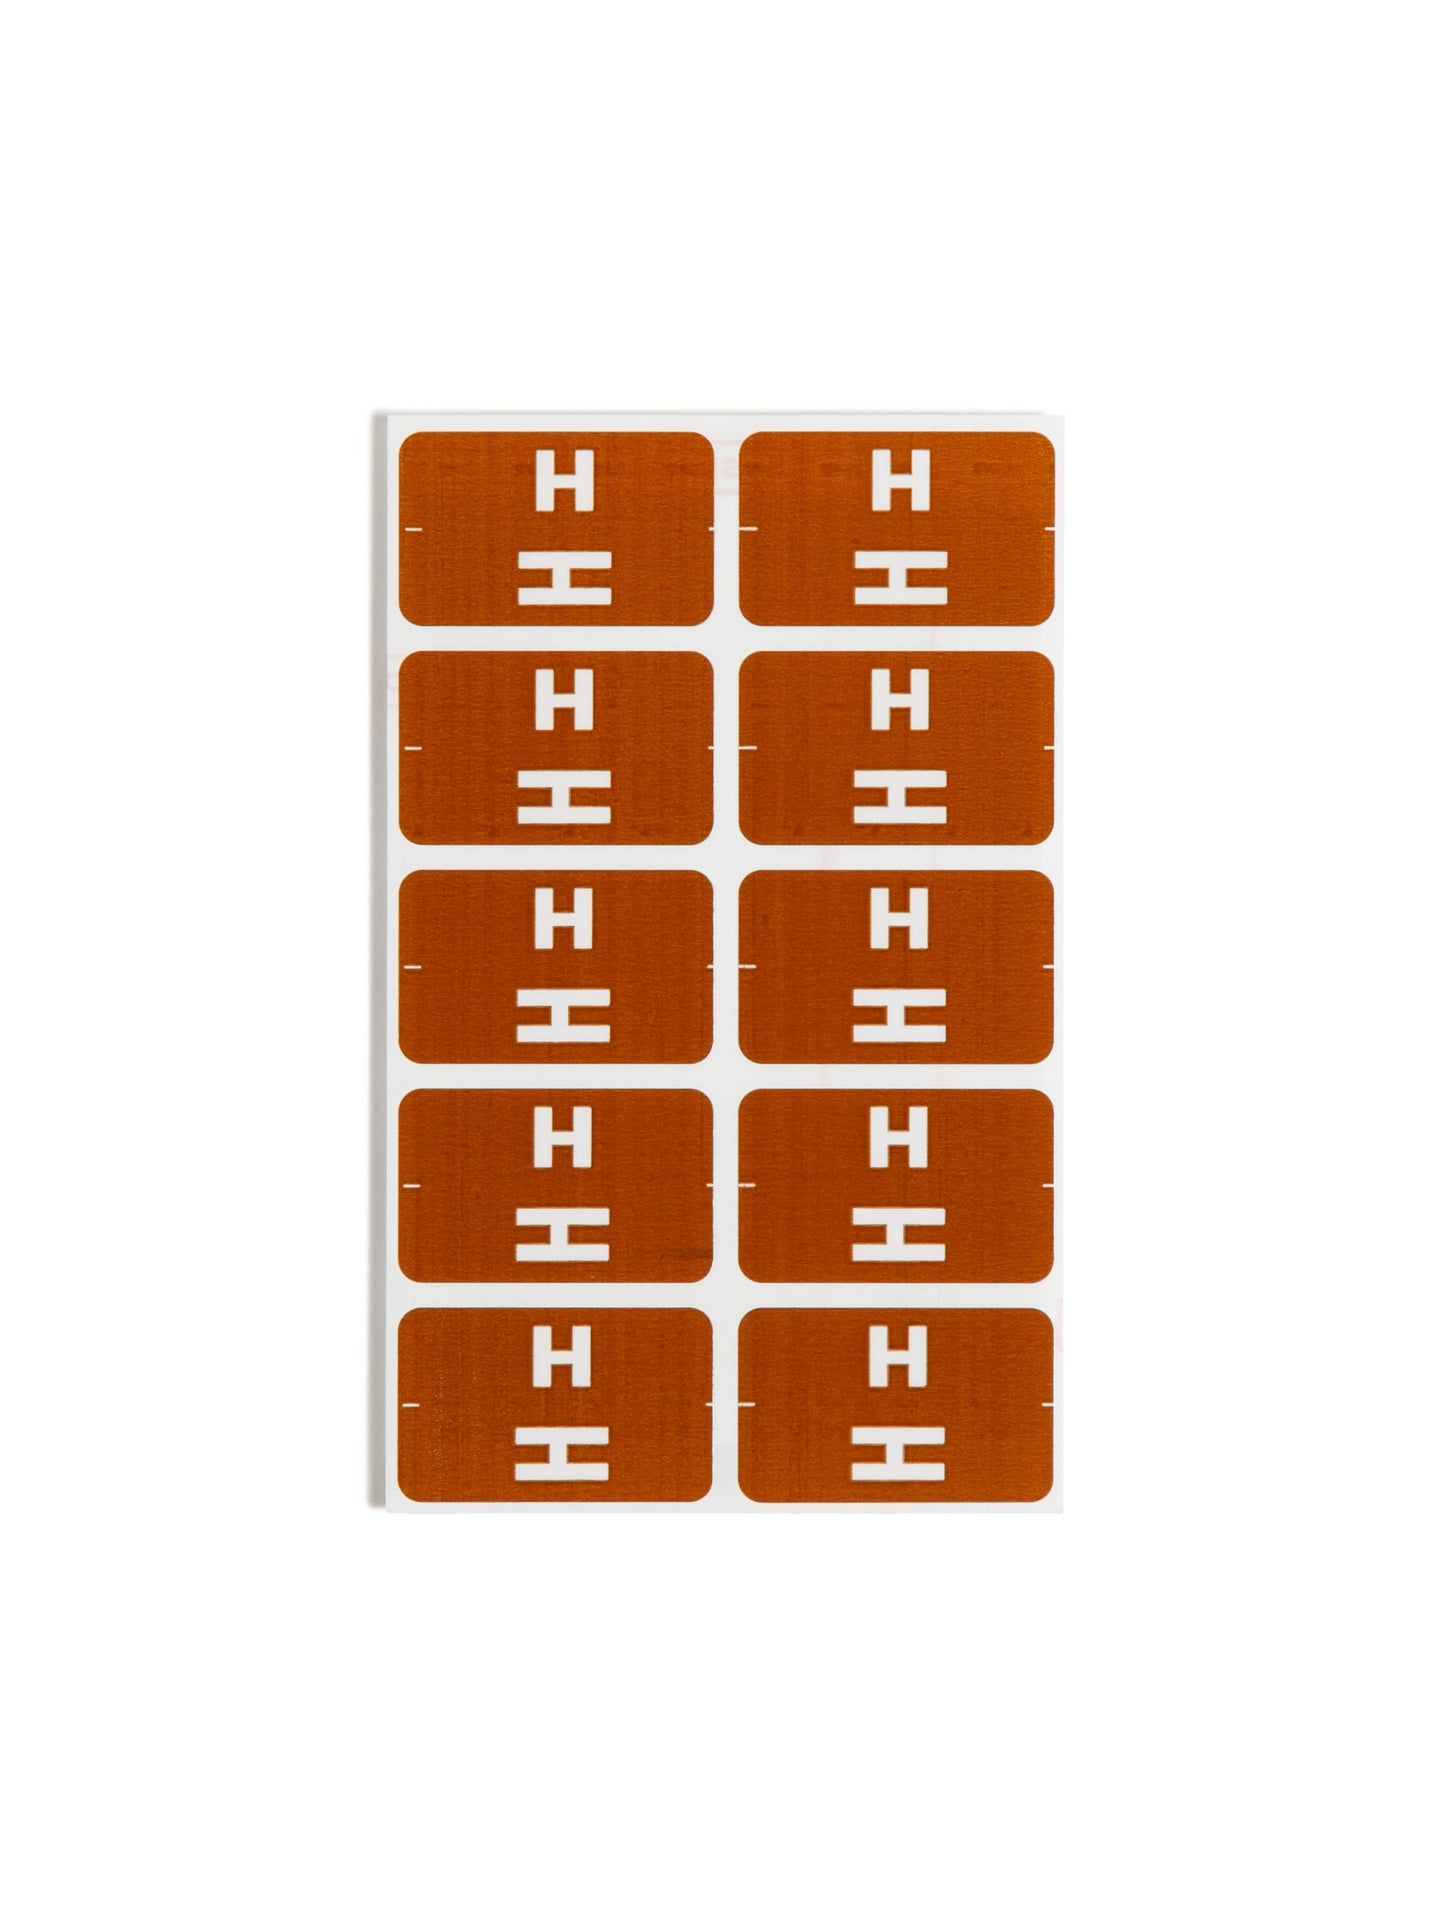 AlphaZ® ACCS Color Coded Alphabetic Labels - Sheets, Dark Brown Color, 1" X 1-5/8" Size, 